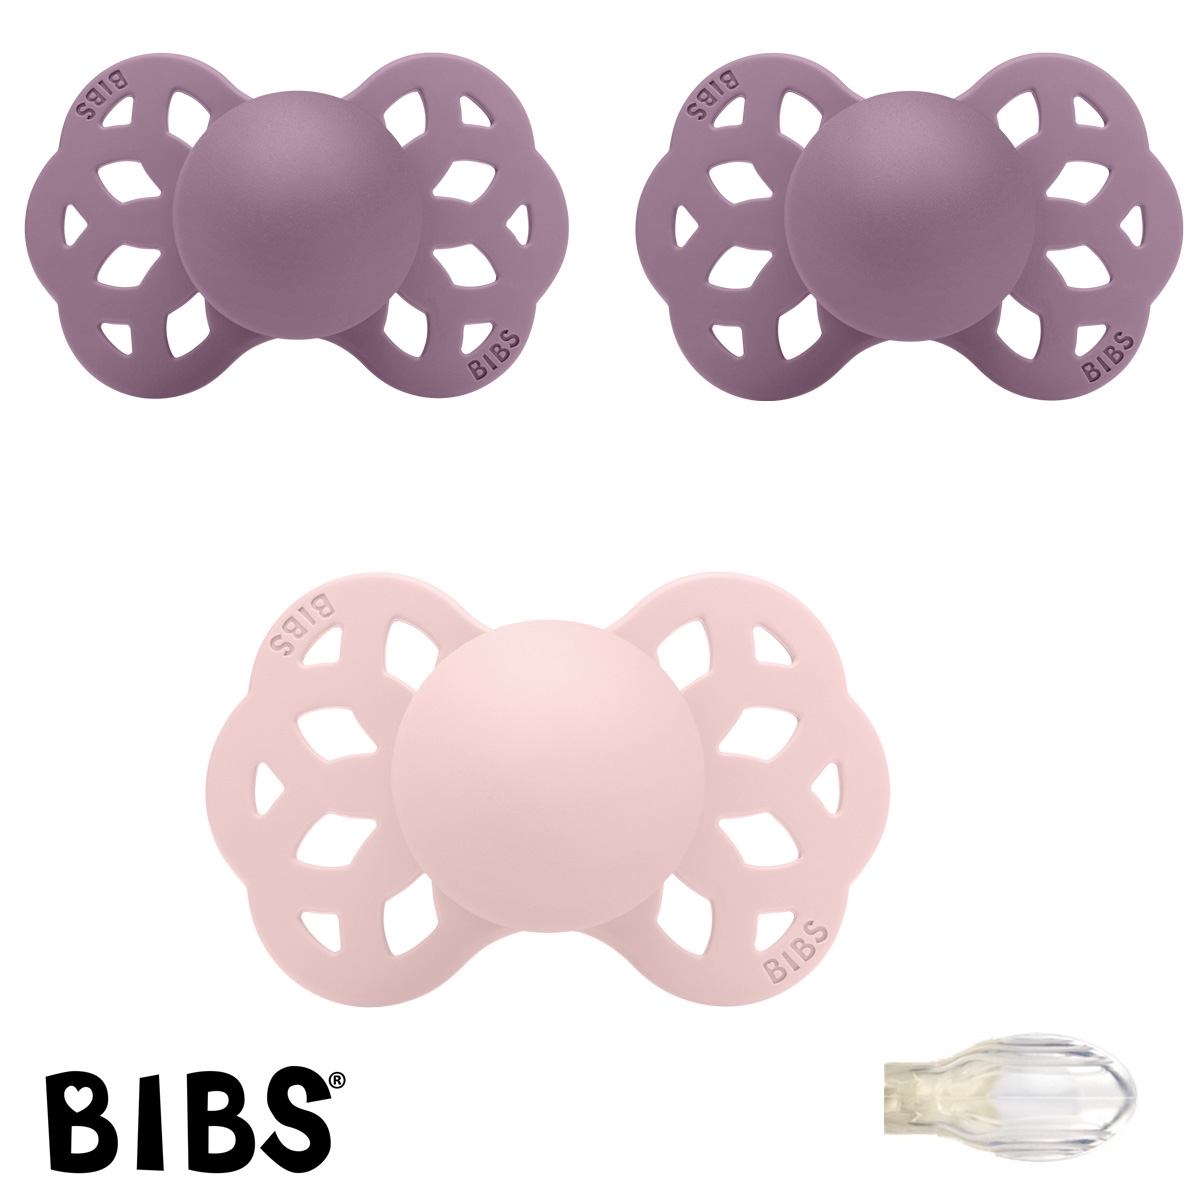 BIBS Infinity Sutter med navn str2, 1 Blossom, 2 Mauve, Symmetrisk Silikone, Pakke med 3 sutter